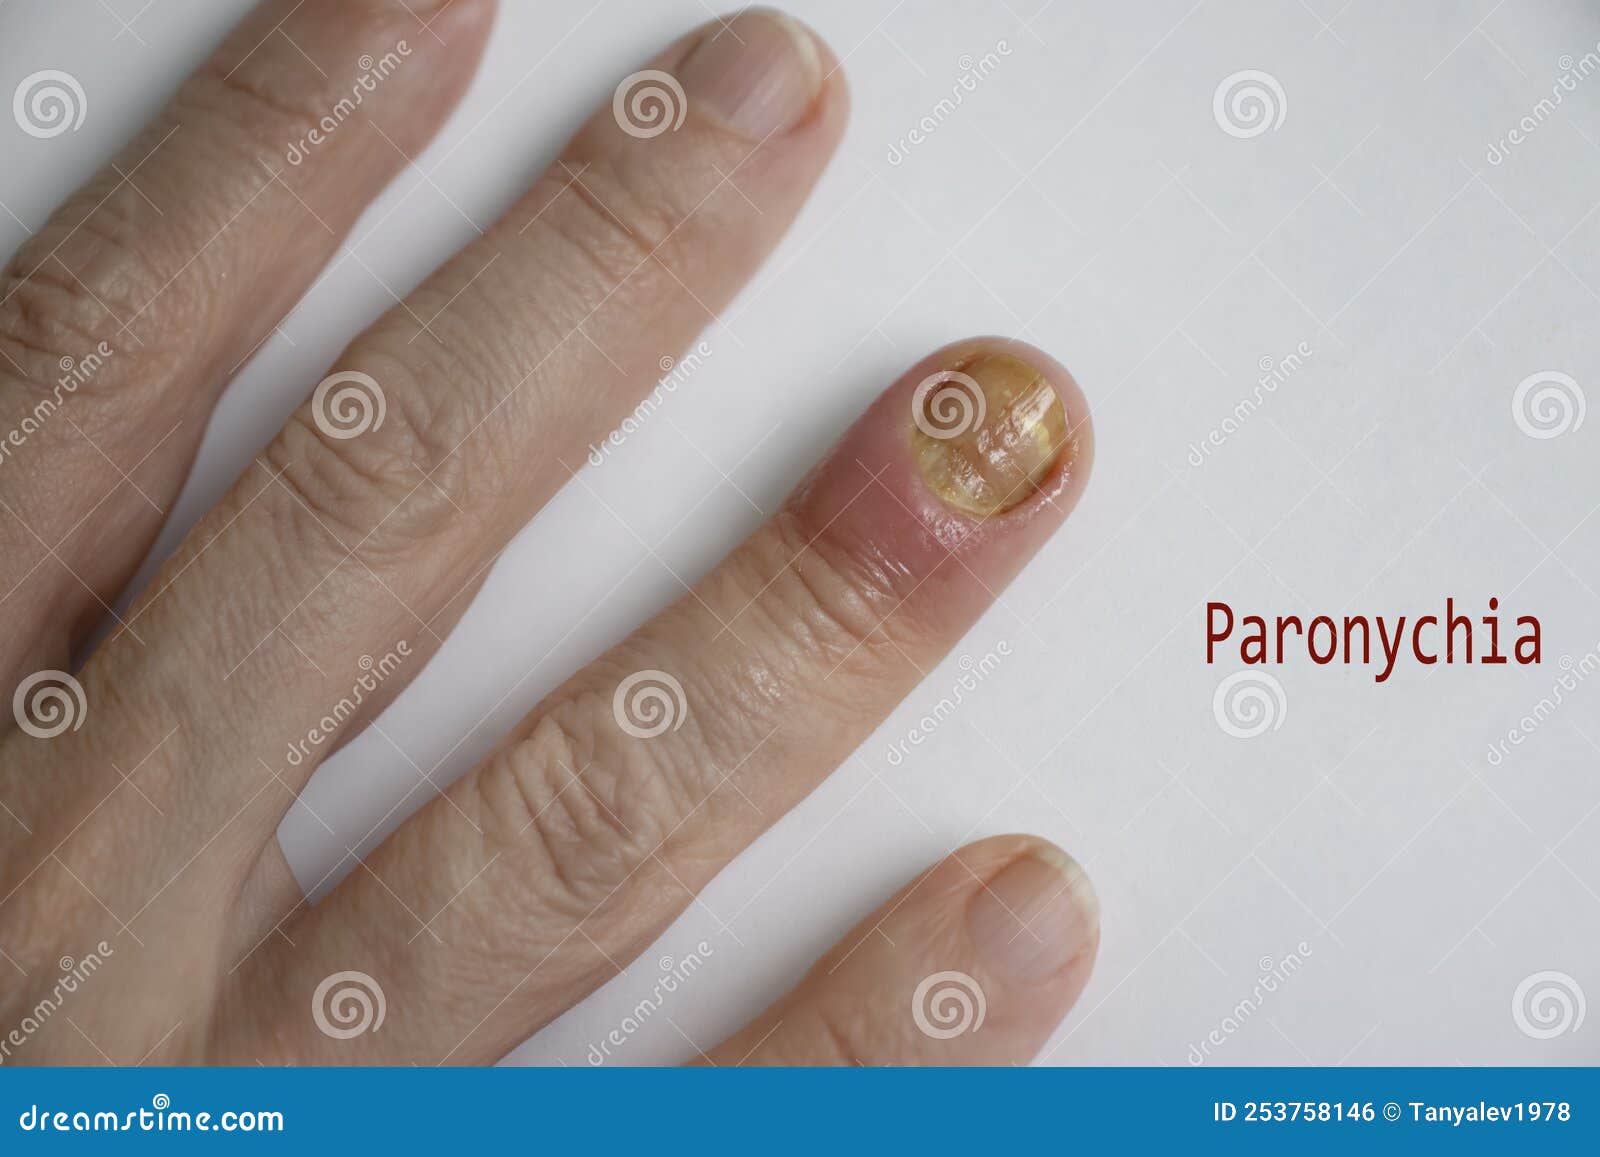 paronychia disease of the fingernail  painful  healing  painful  problem